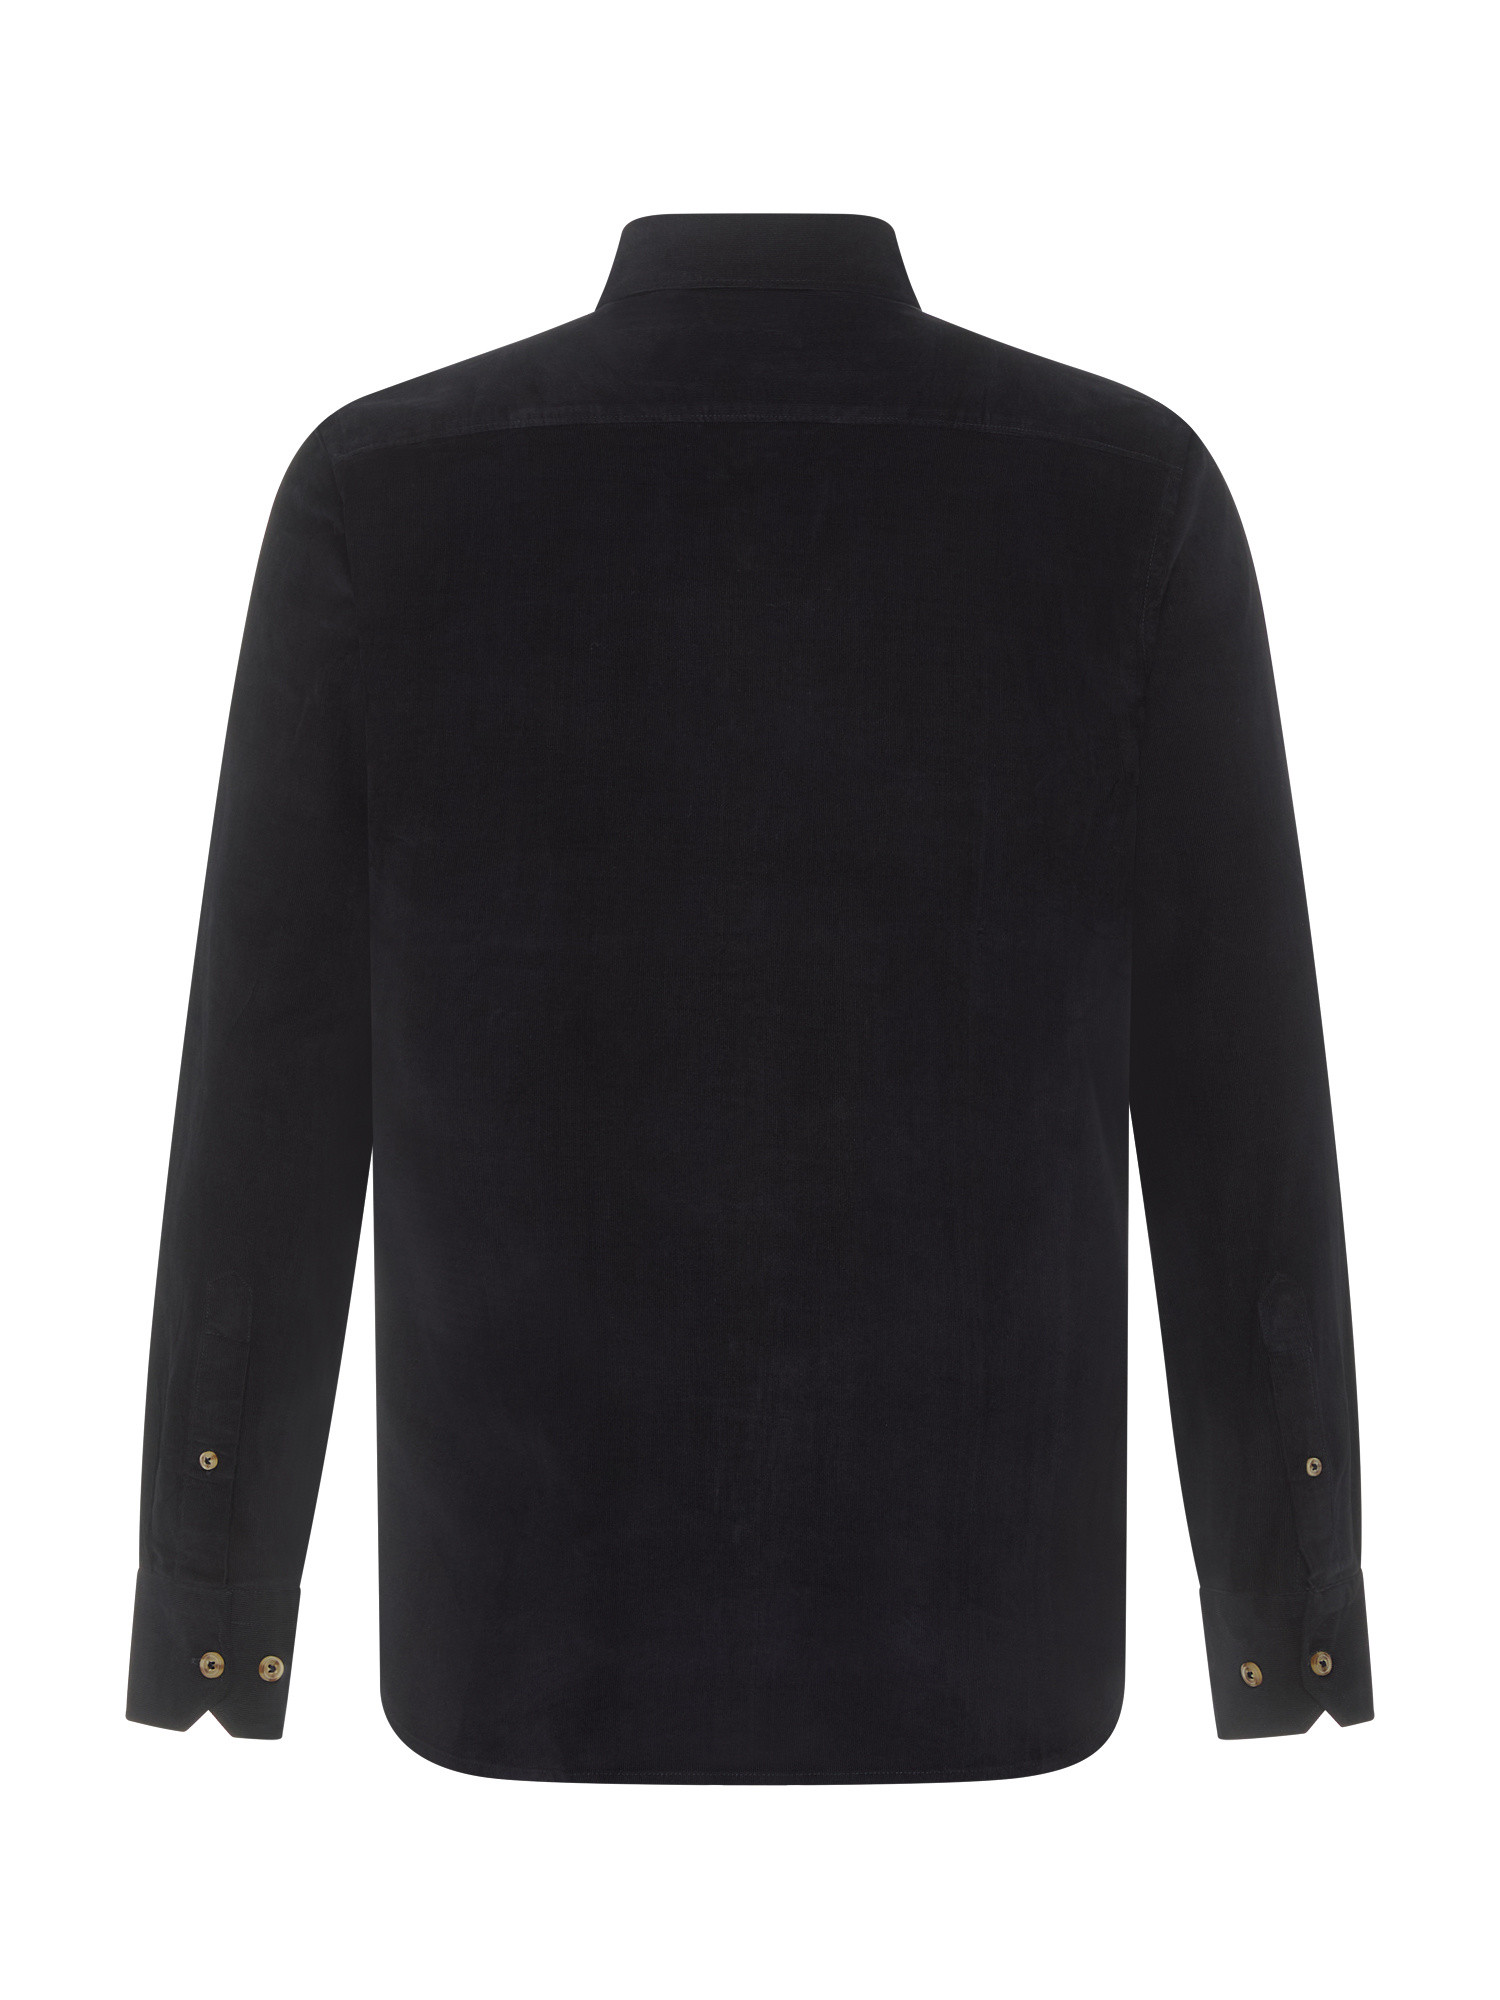 Luca D'Altieri - Regular fit casual shirt in fine cotton velvet, Black, large image number 1